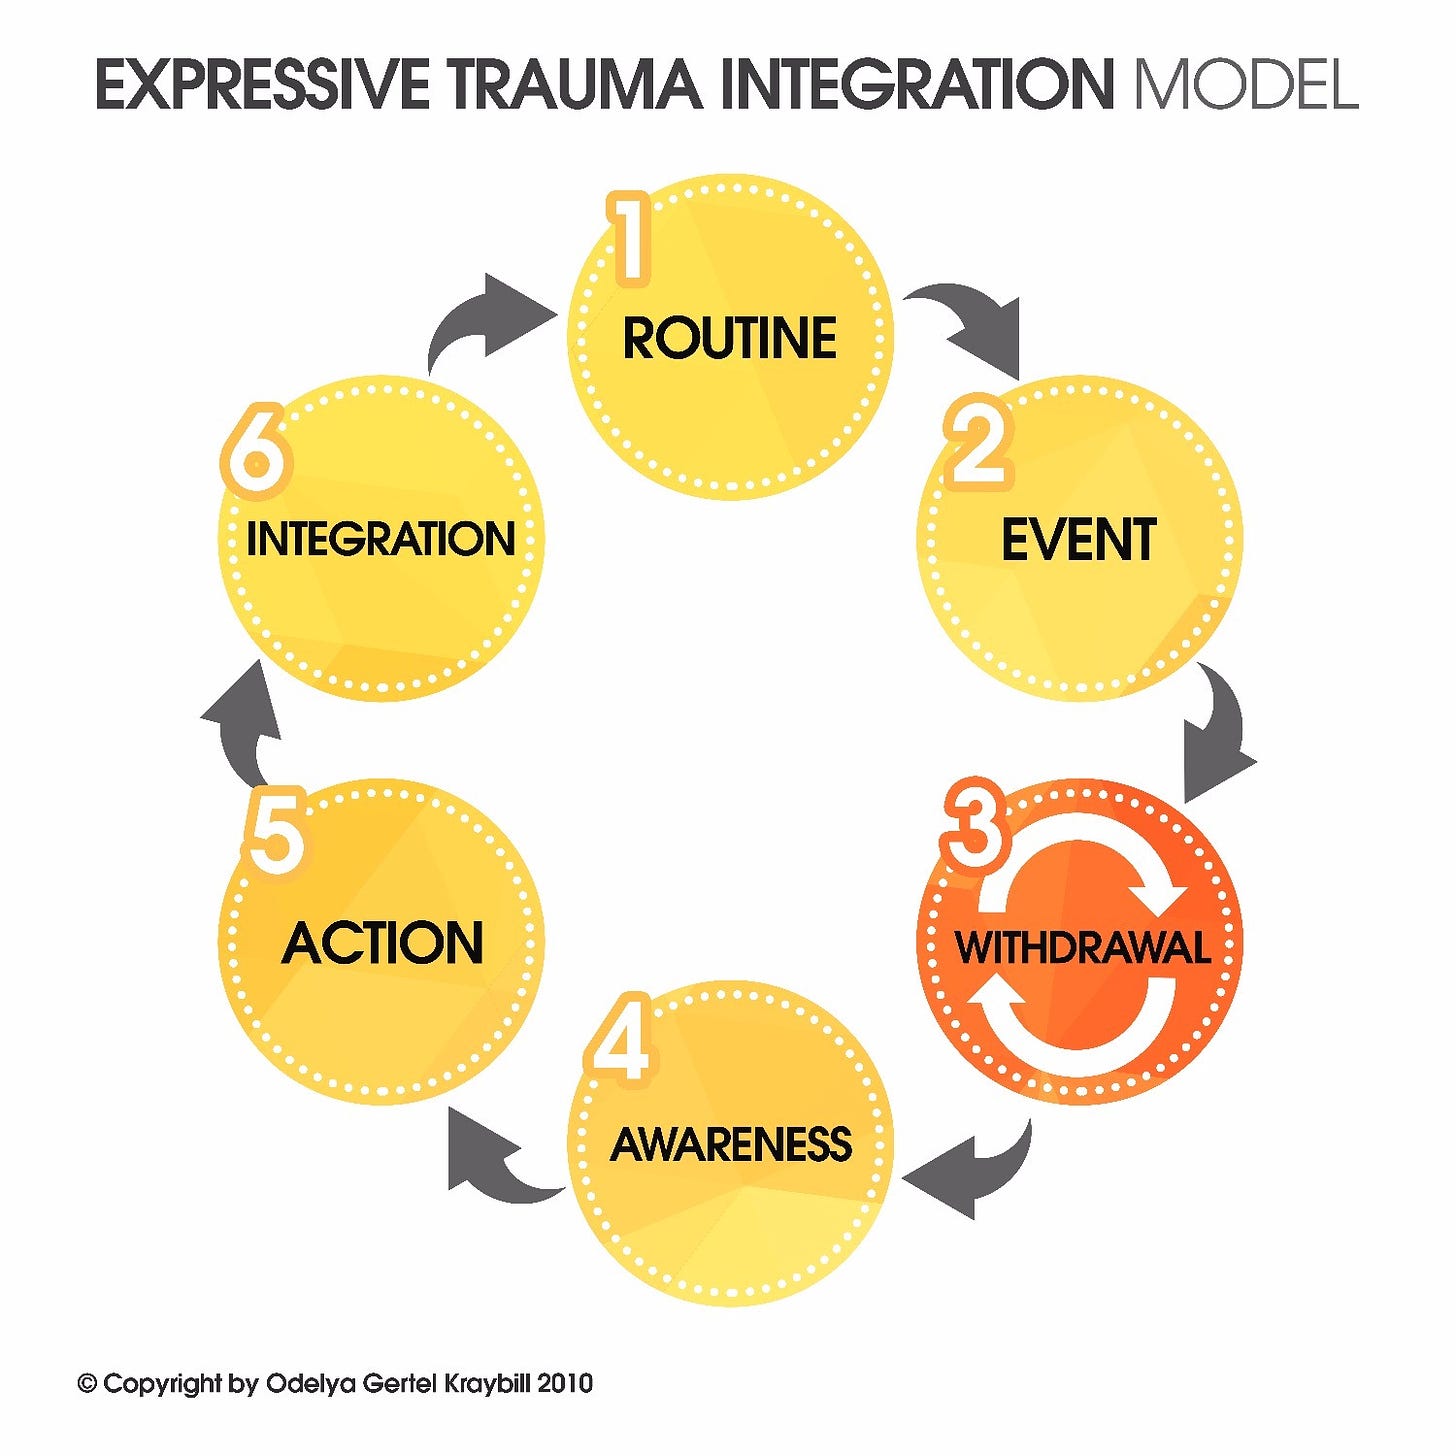 A diagram of a trauma integration model

Description automatically generated